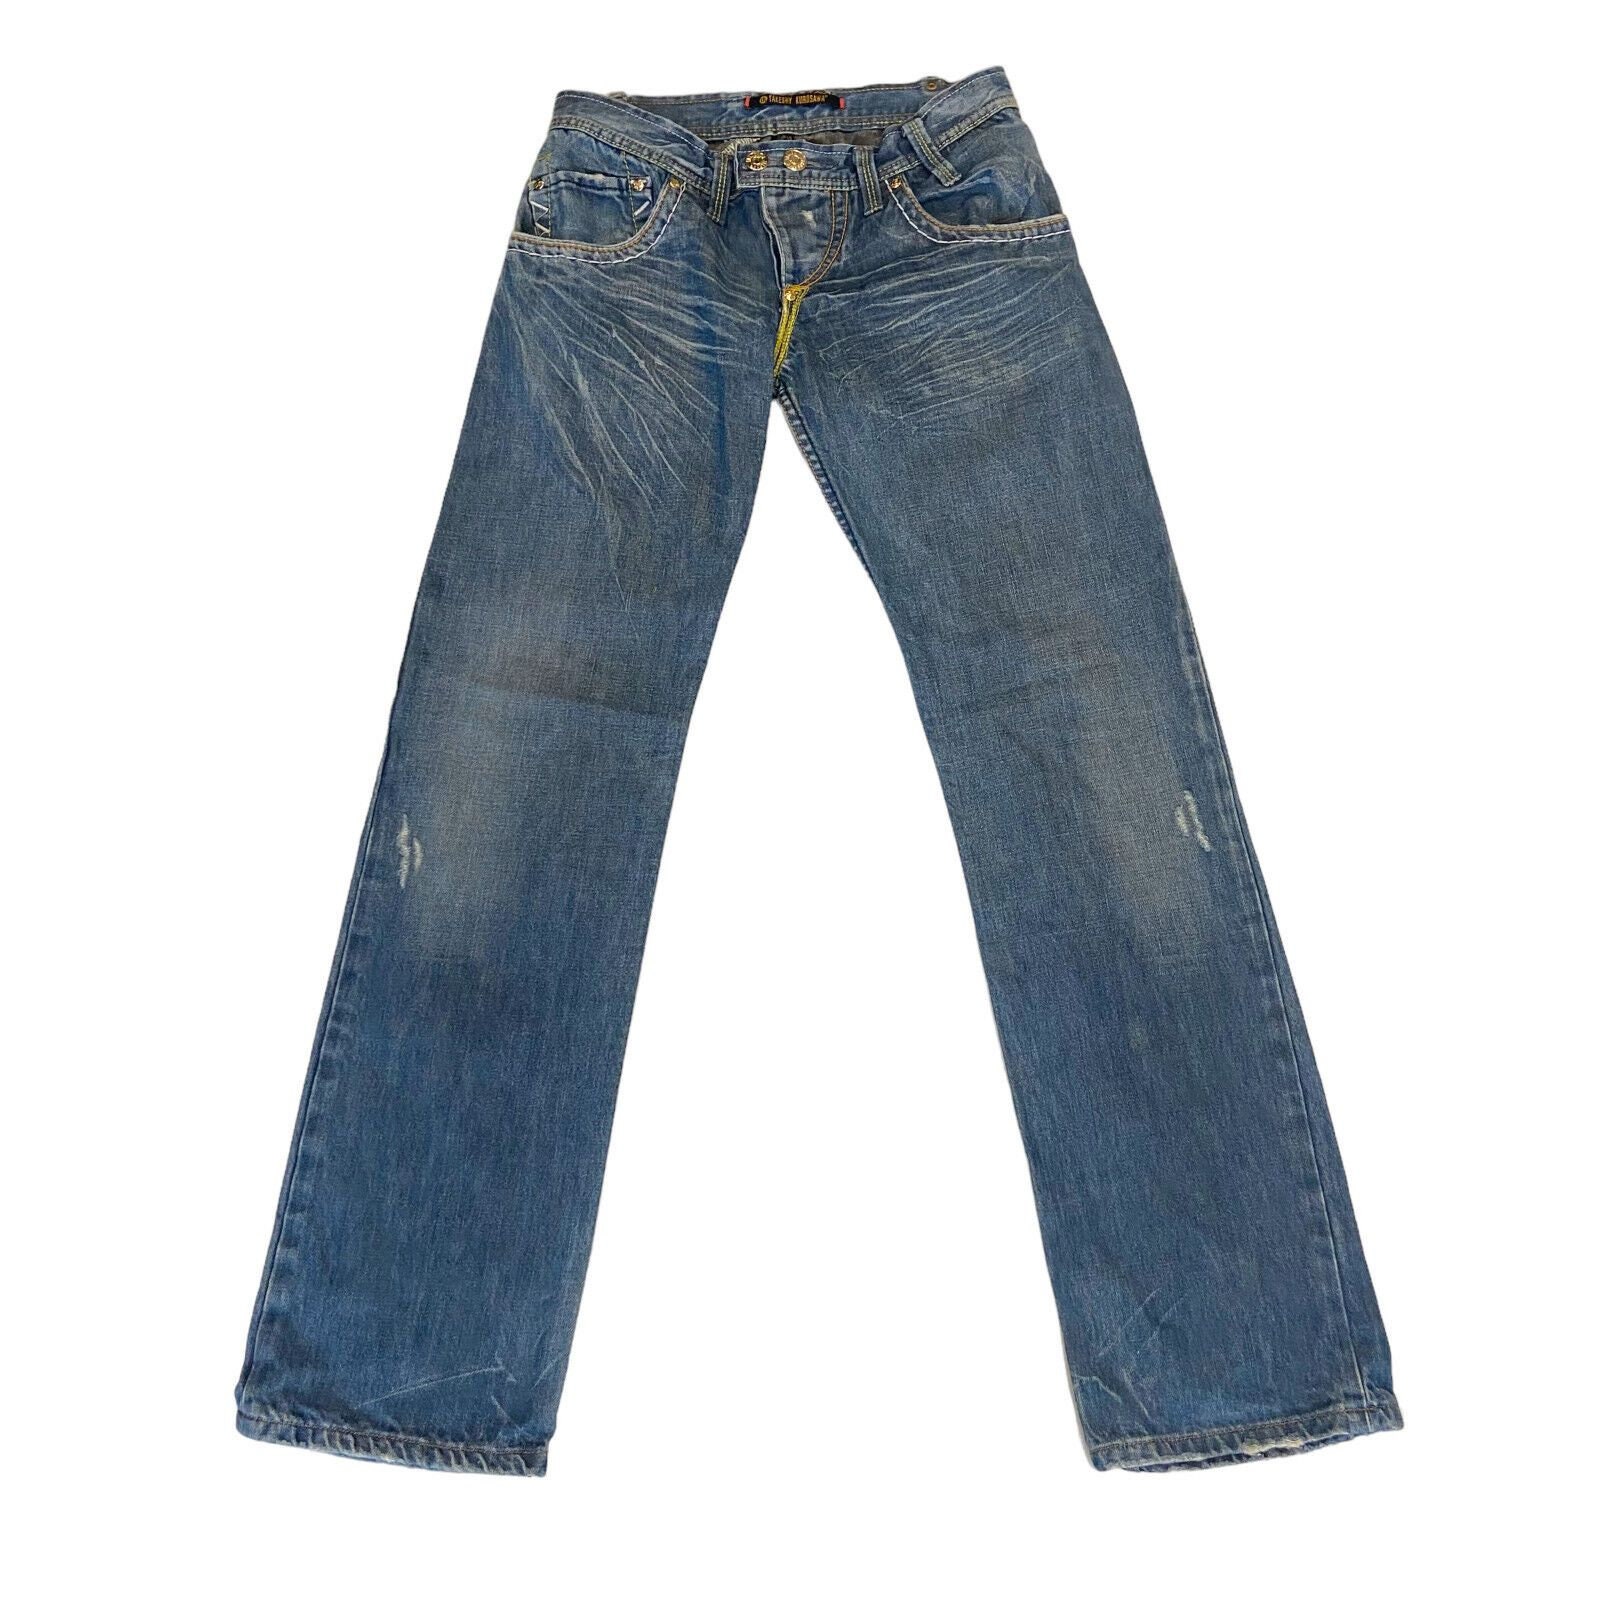 Vintage Y2K Jeans, Lace up Denim Jeans, Bootcut Jeans, Denim Flares. UK 6 